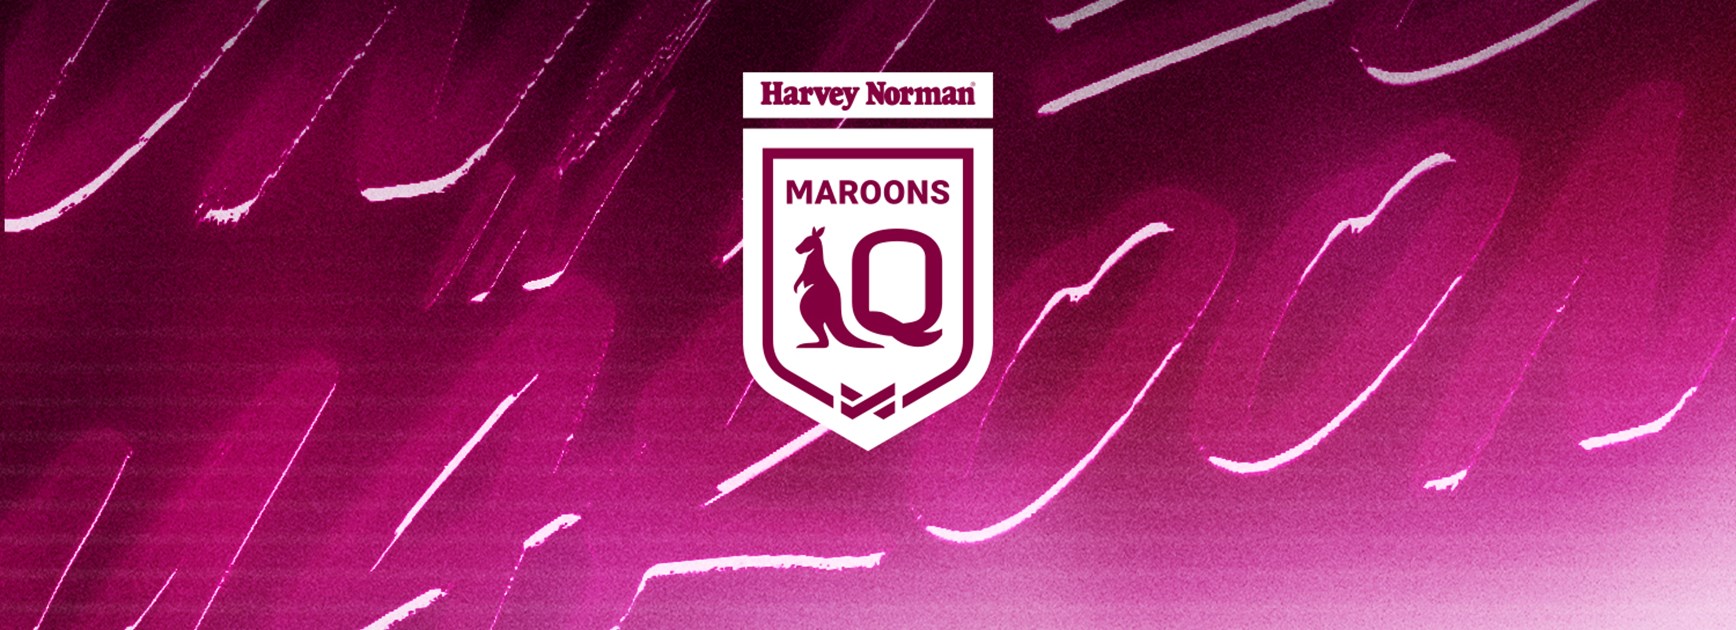 Harvey Norman Queensland Maroons Game I team list confirmed